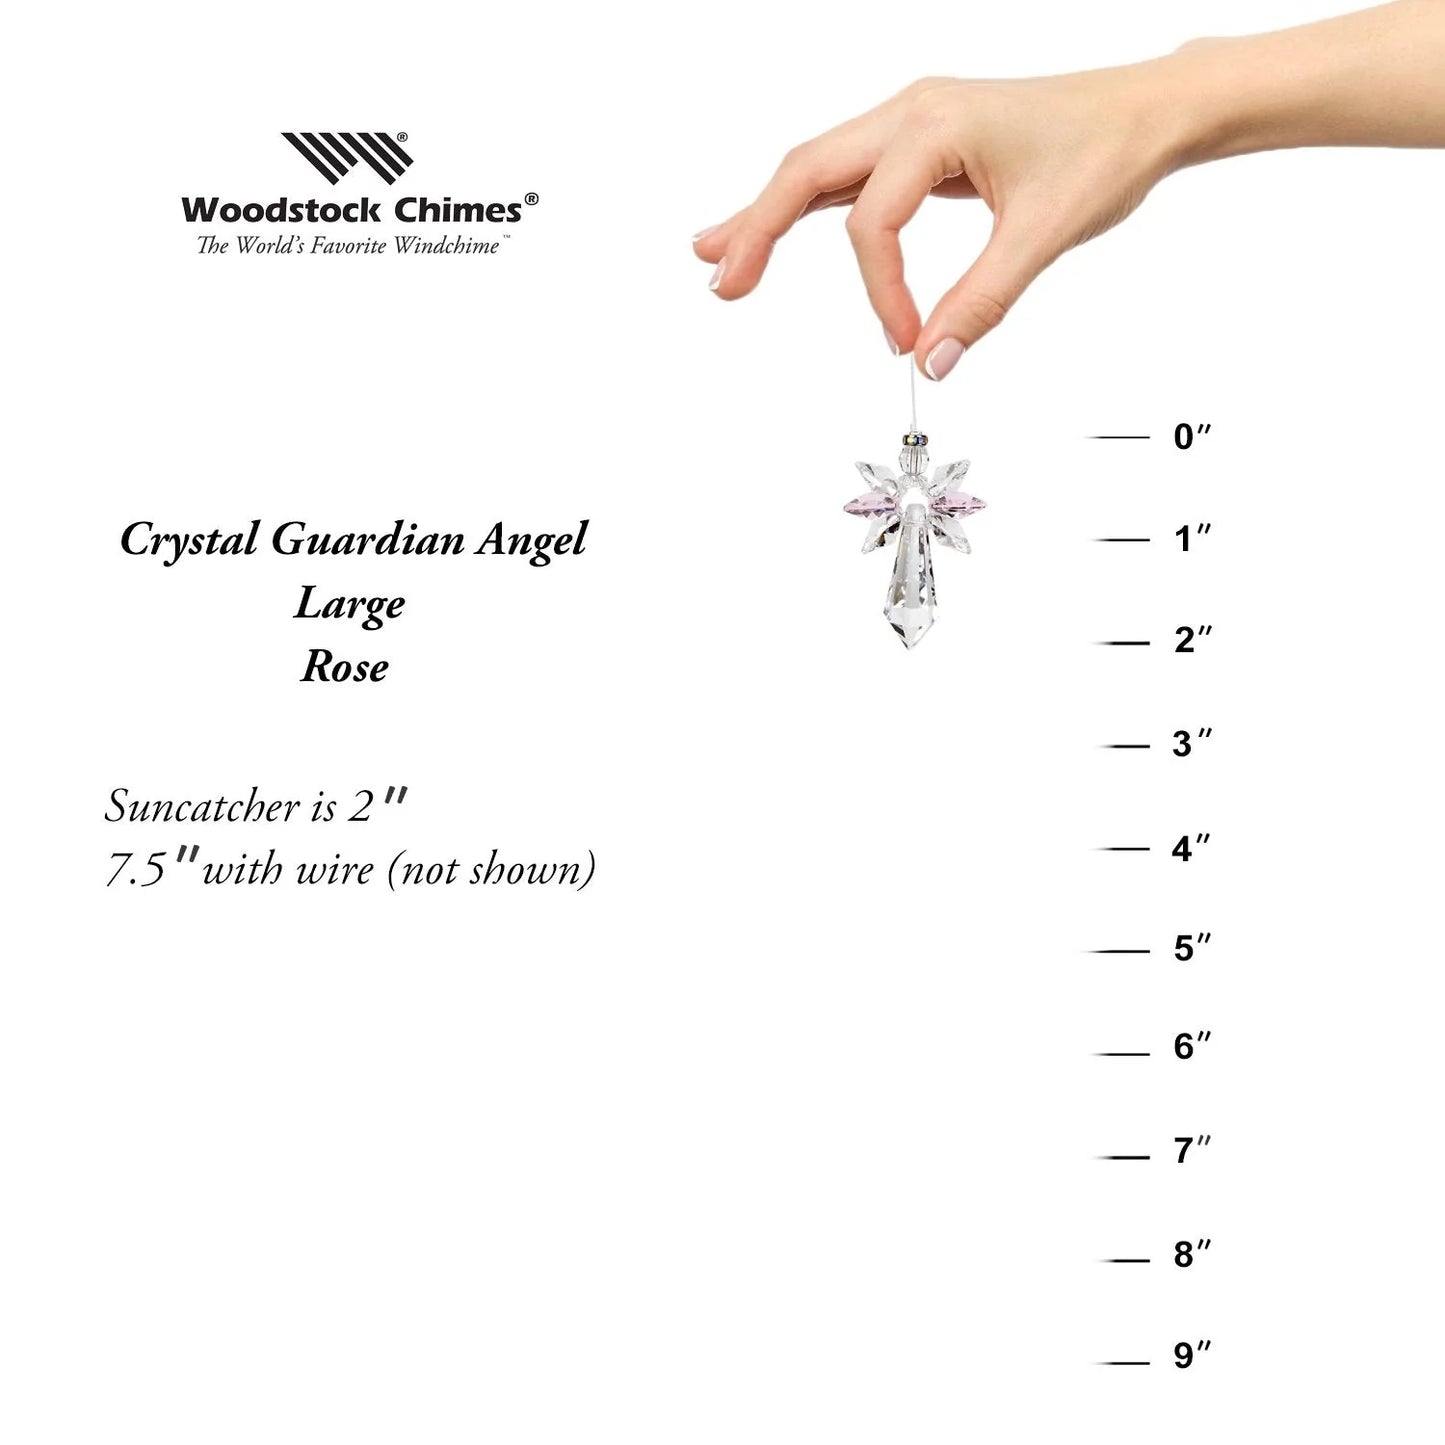 Crystal Guardian Angel Suncatcher - Large Rose